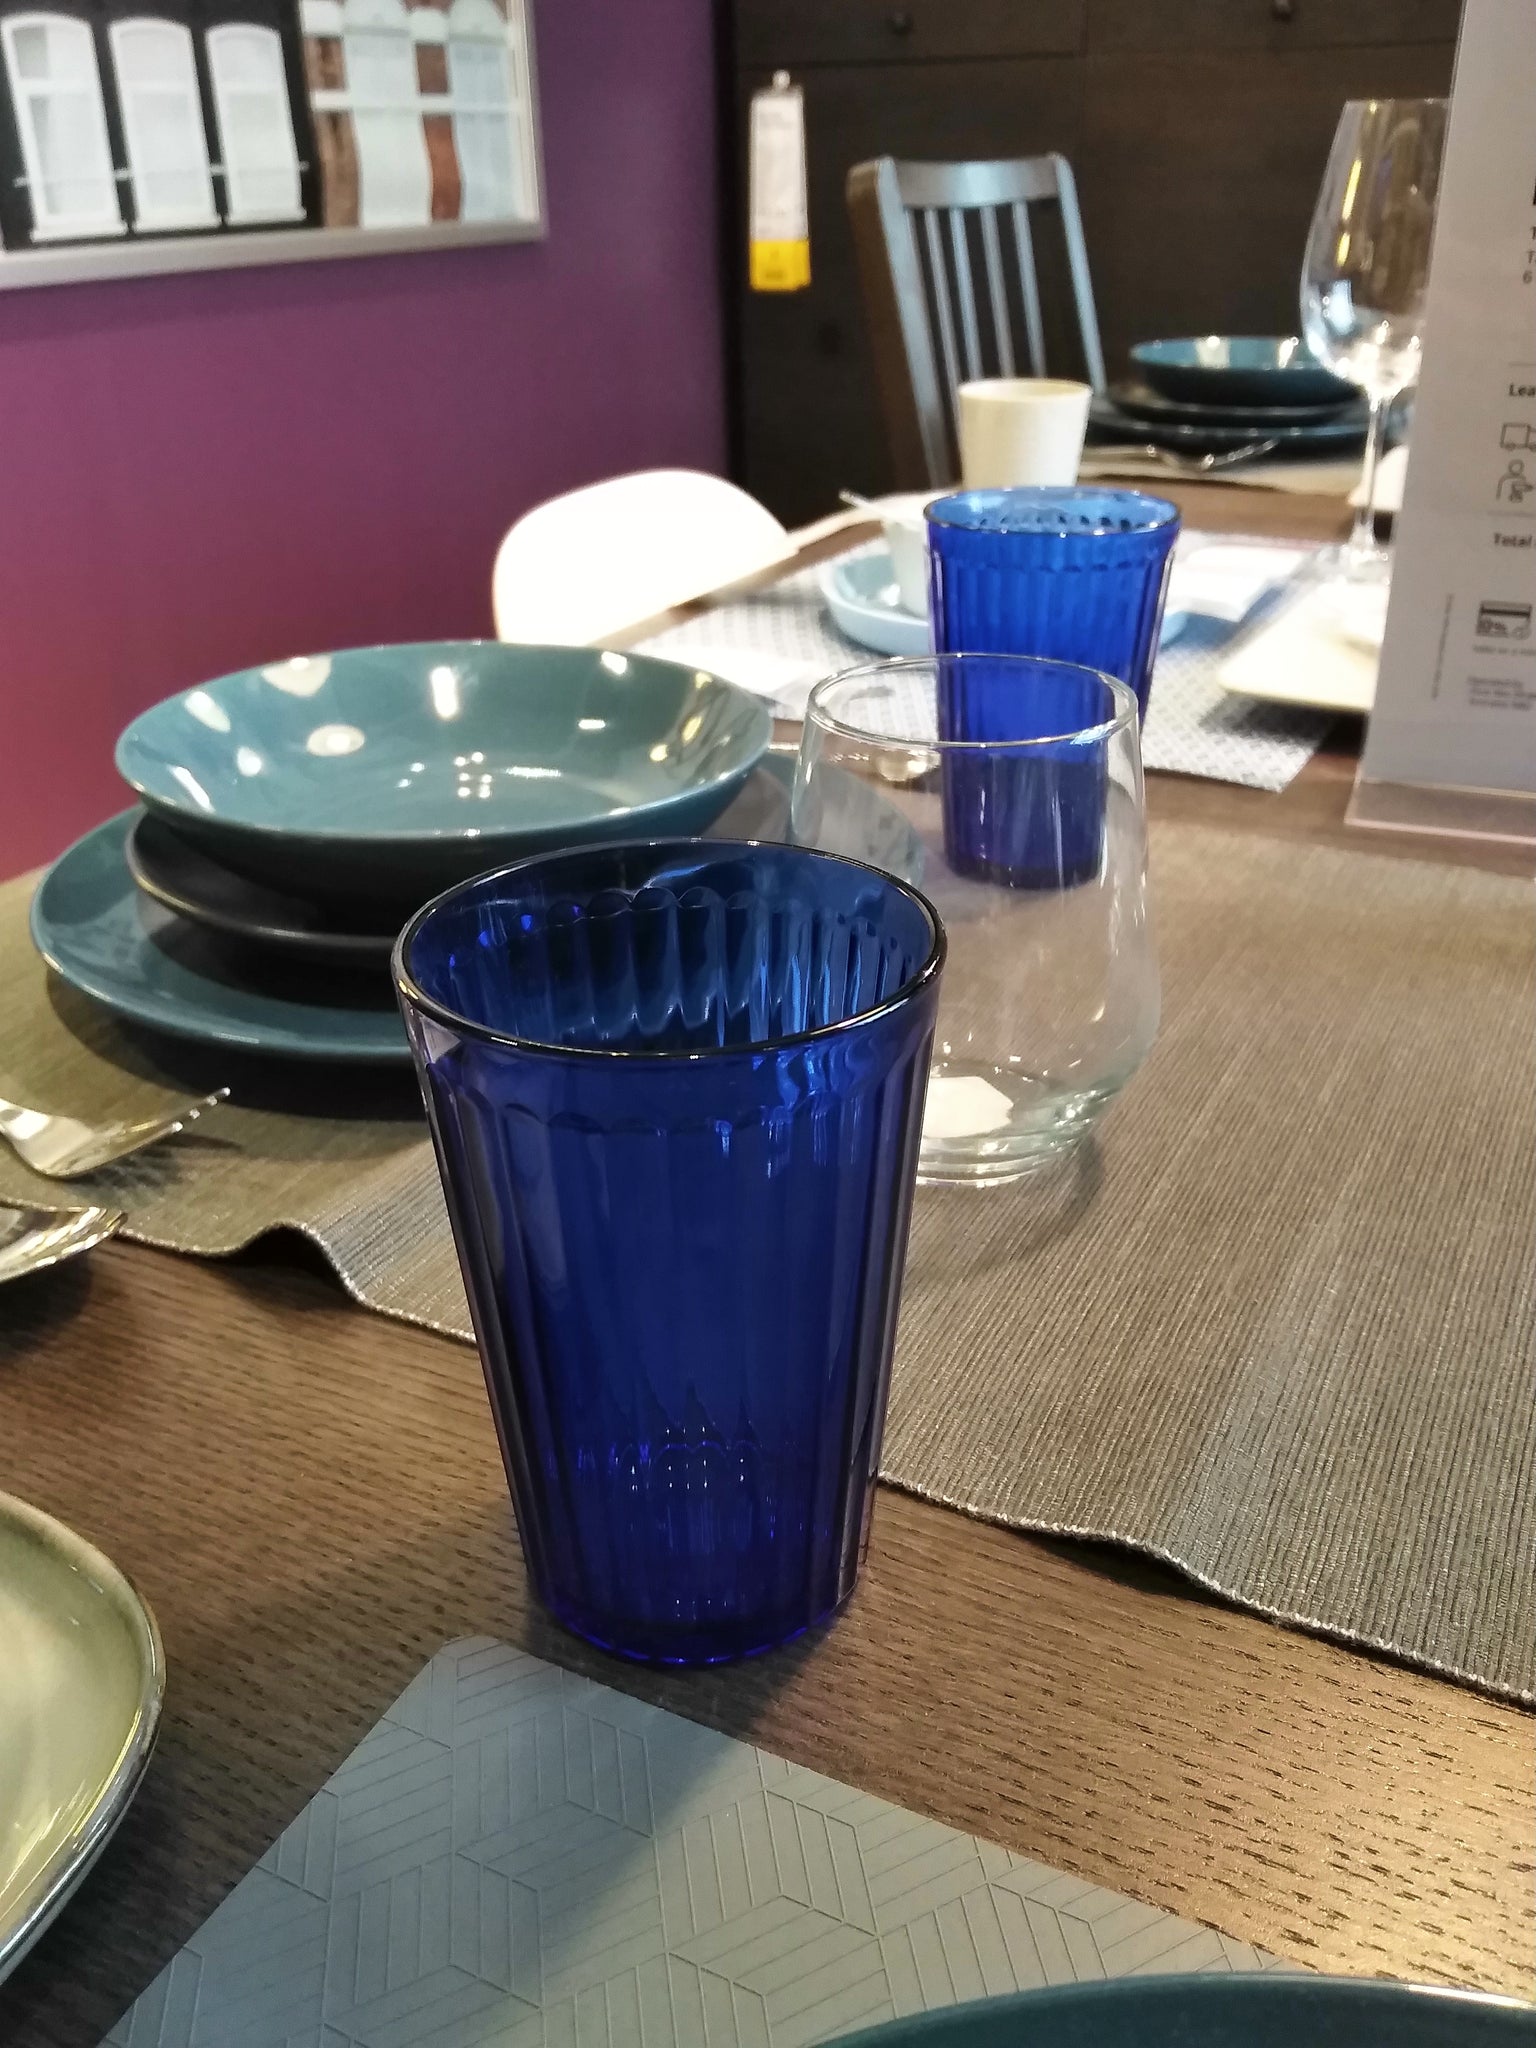 SVALKA Juice Glass, clear glass, 21 cl - IKEA